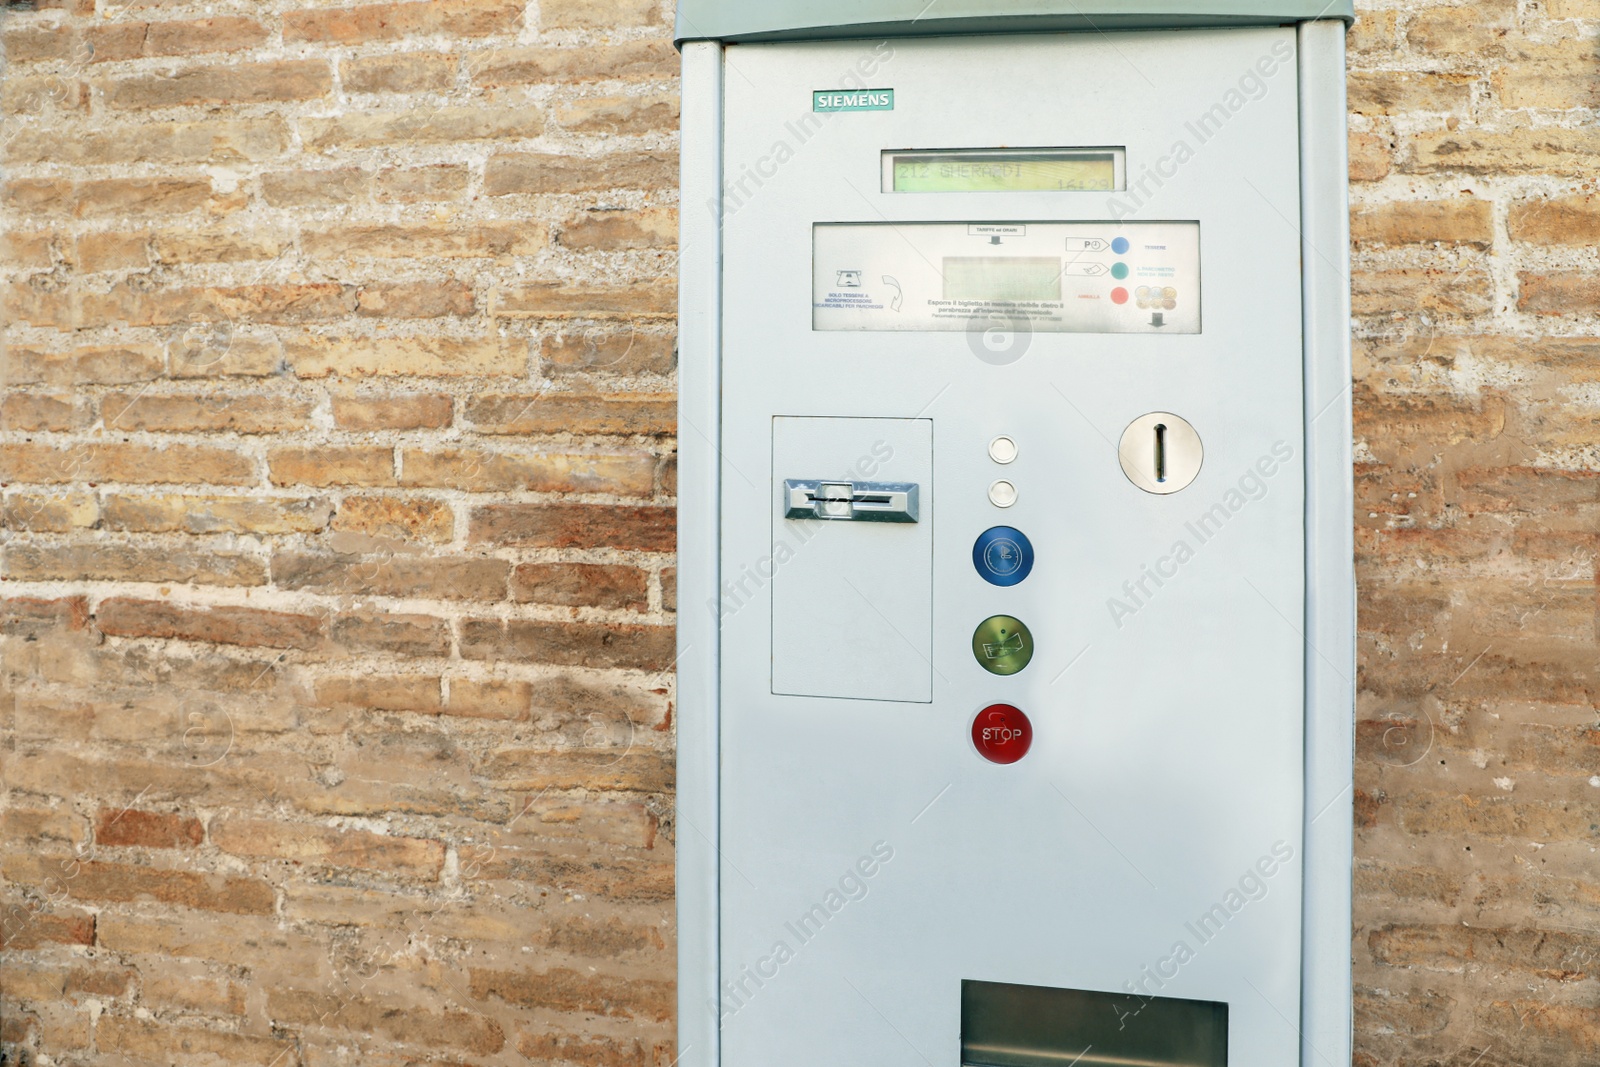 Photo of Senigallia, Italy - April 30, 2022: Parking meter on brick wall